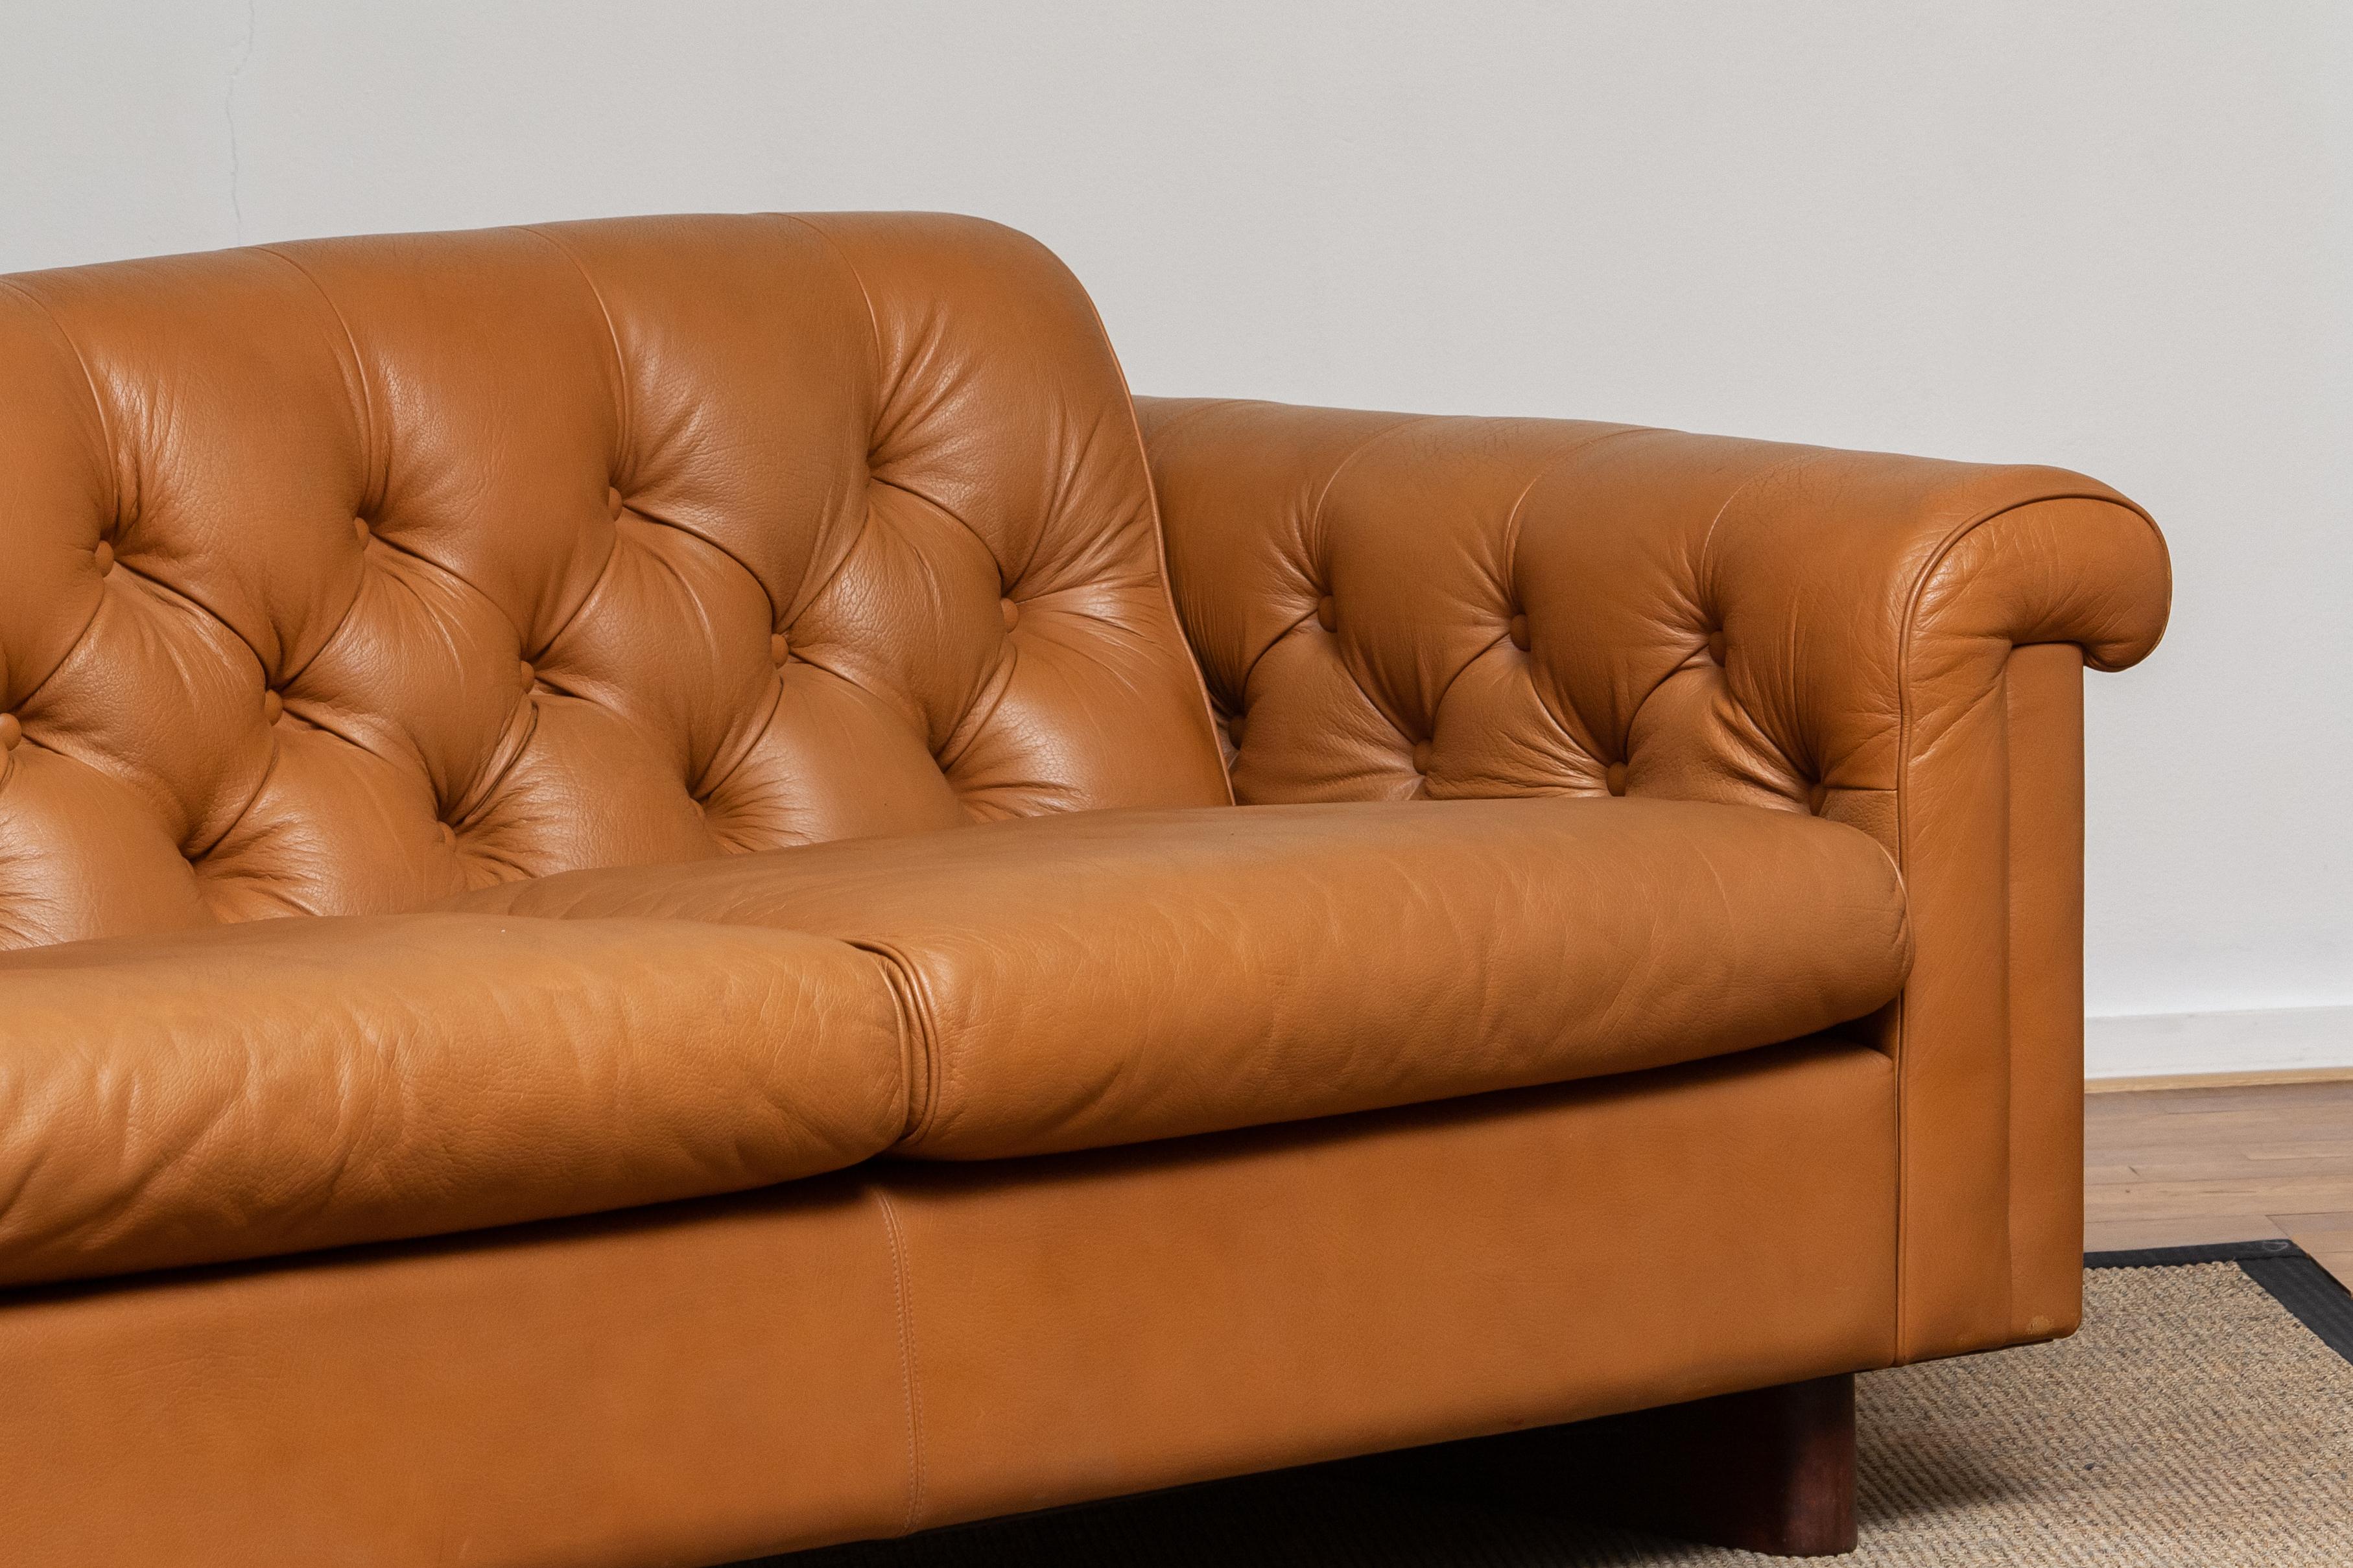 1970's Sofa by Karl Erik Ekselius for JOC Design in Camel Color Tufted Leather 3